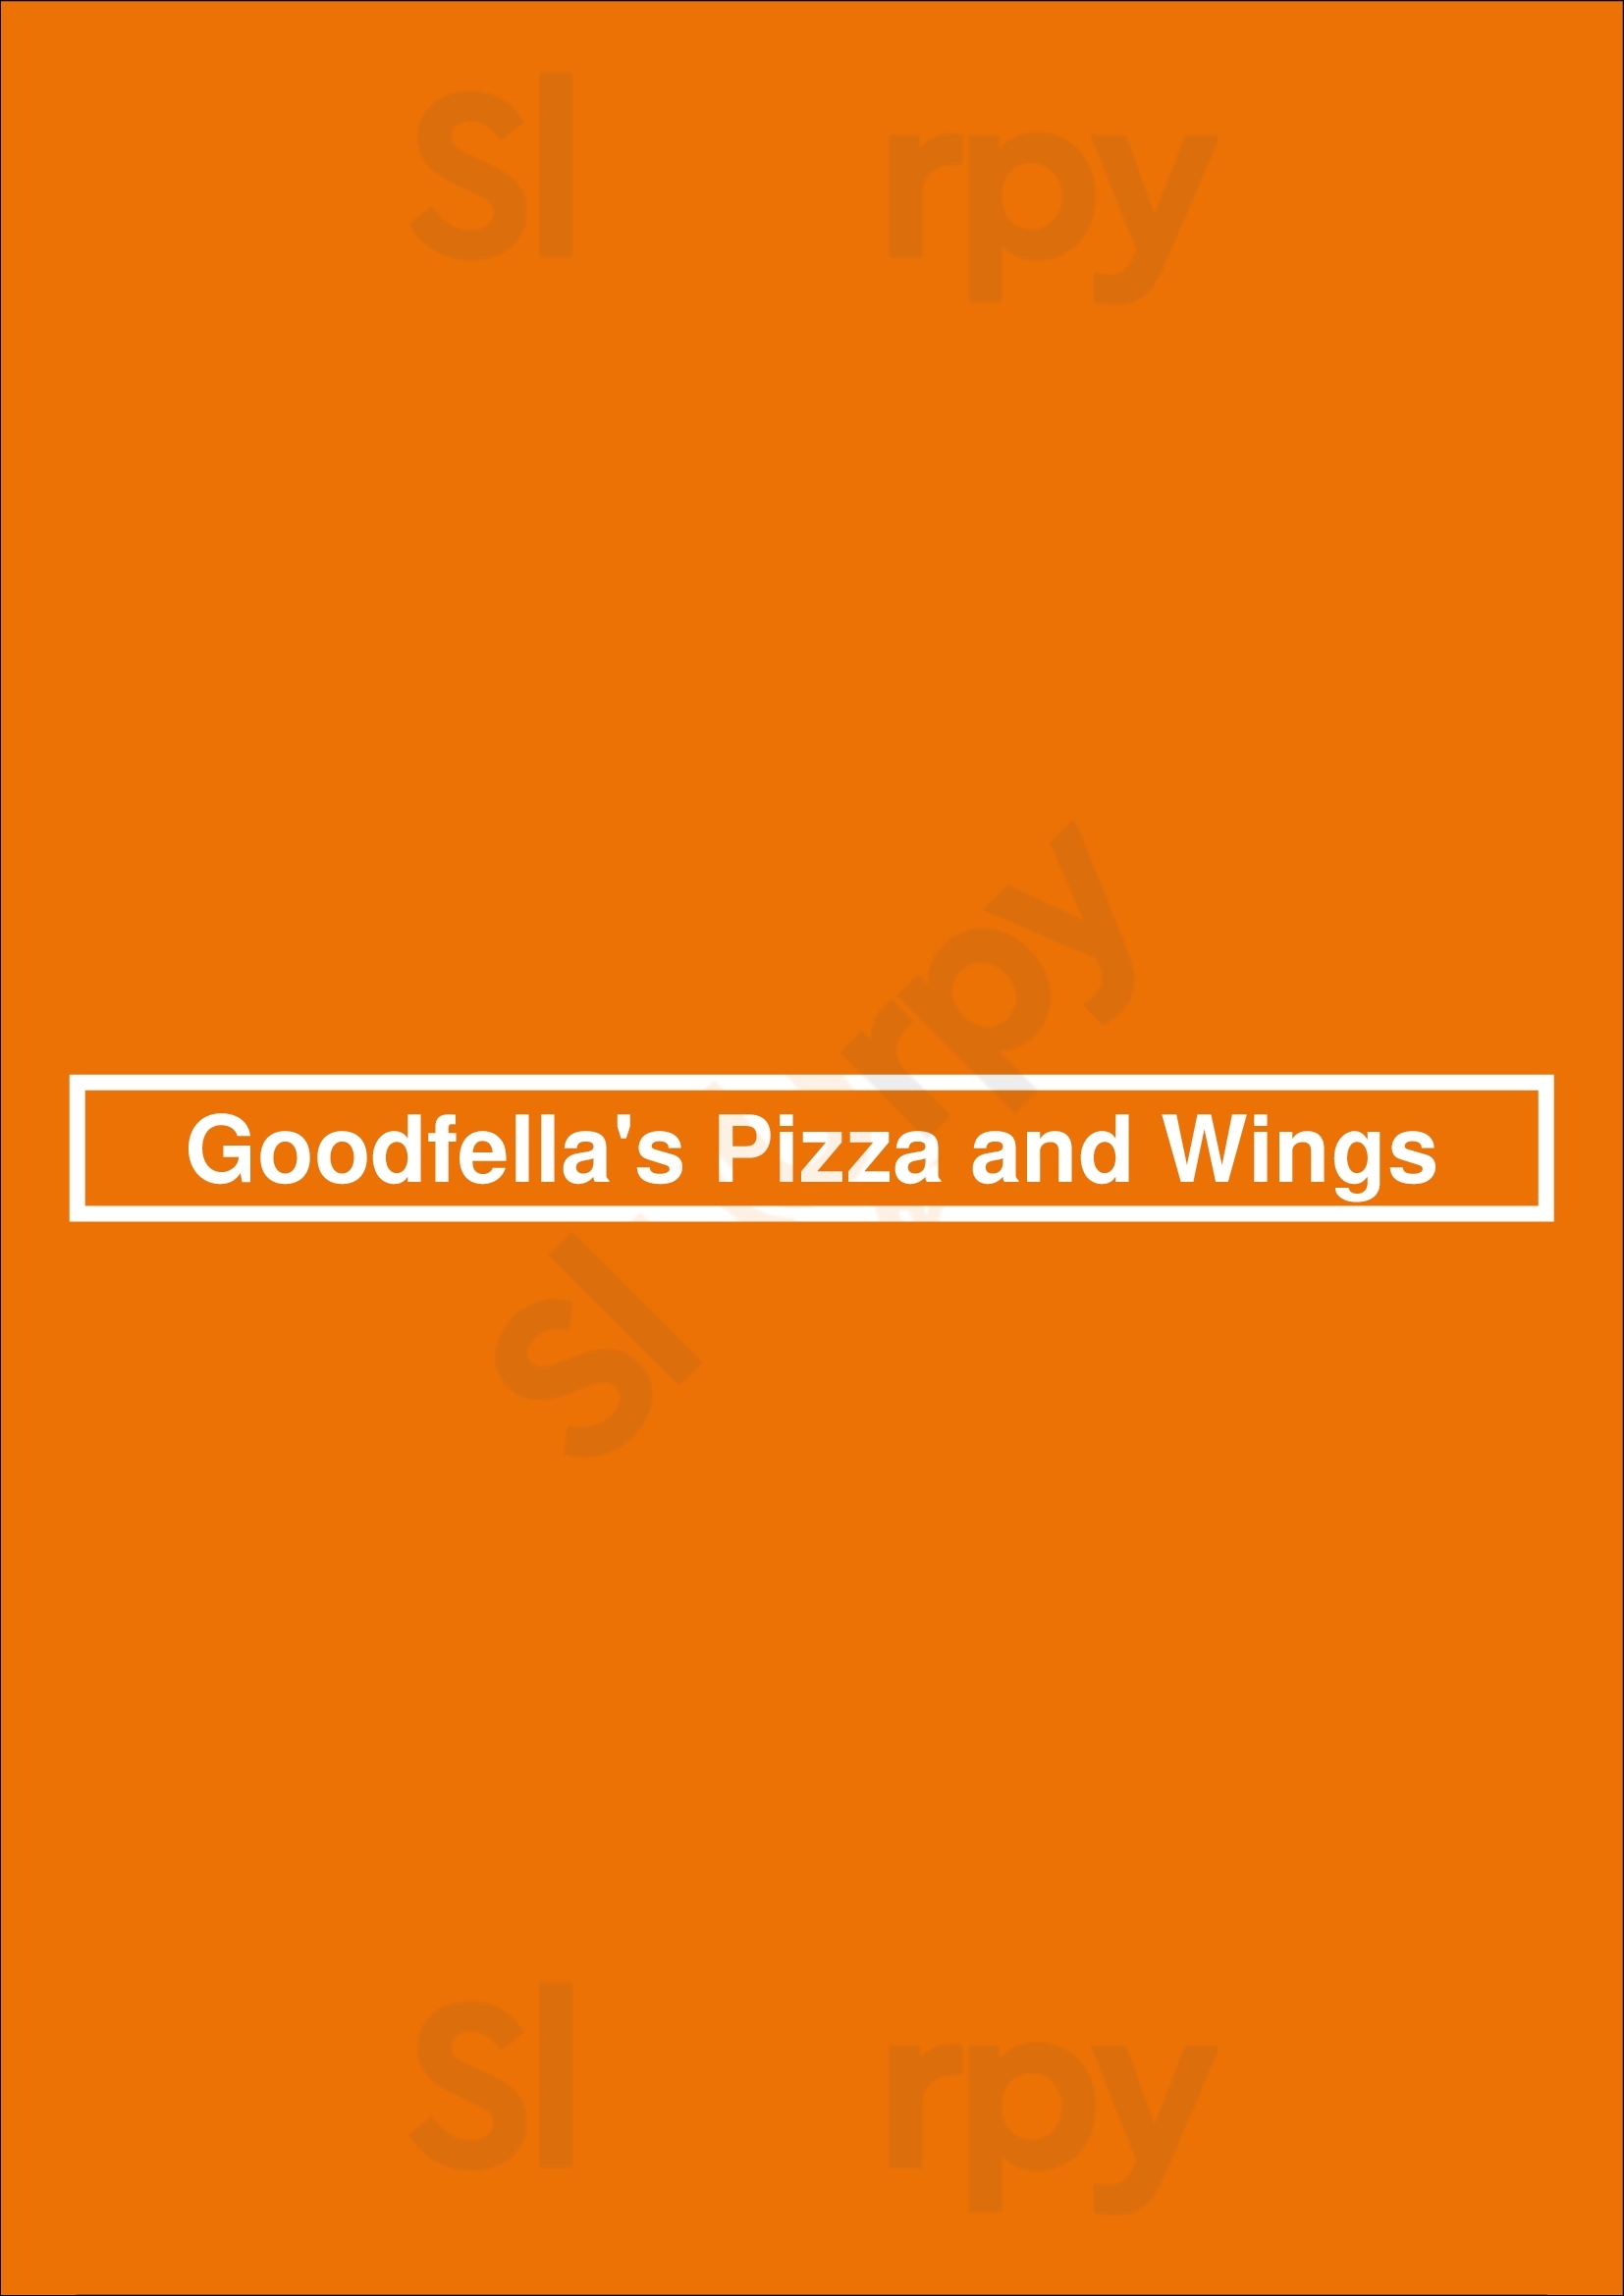 Goodfella's Pizza And Wings Atlanta Menu - 1